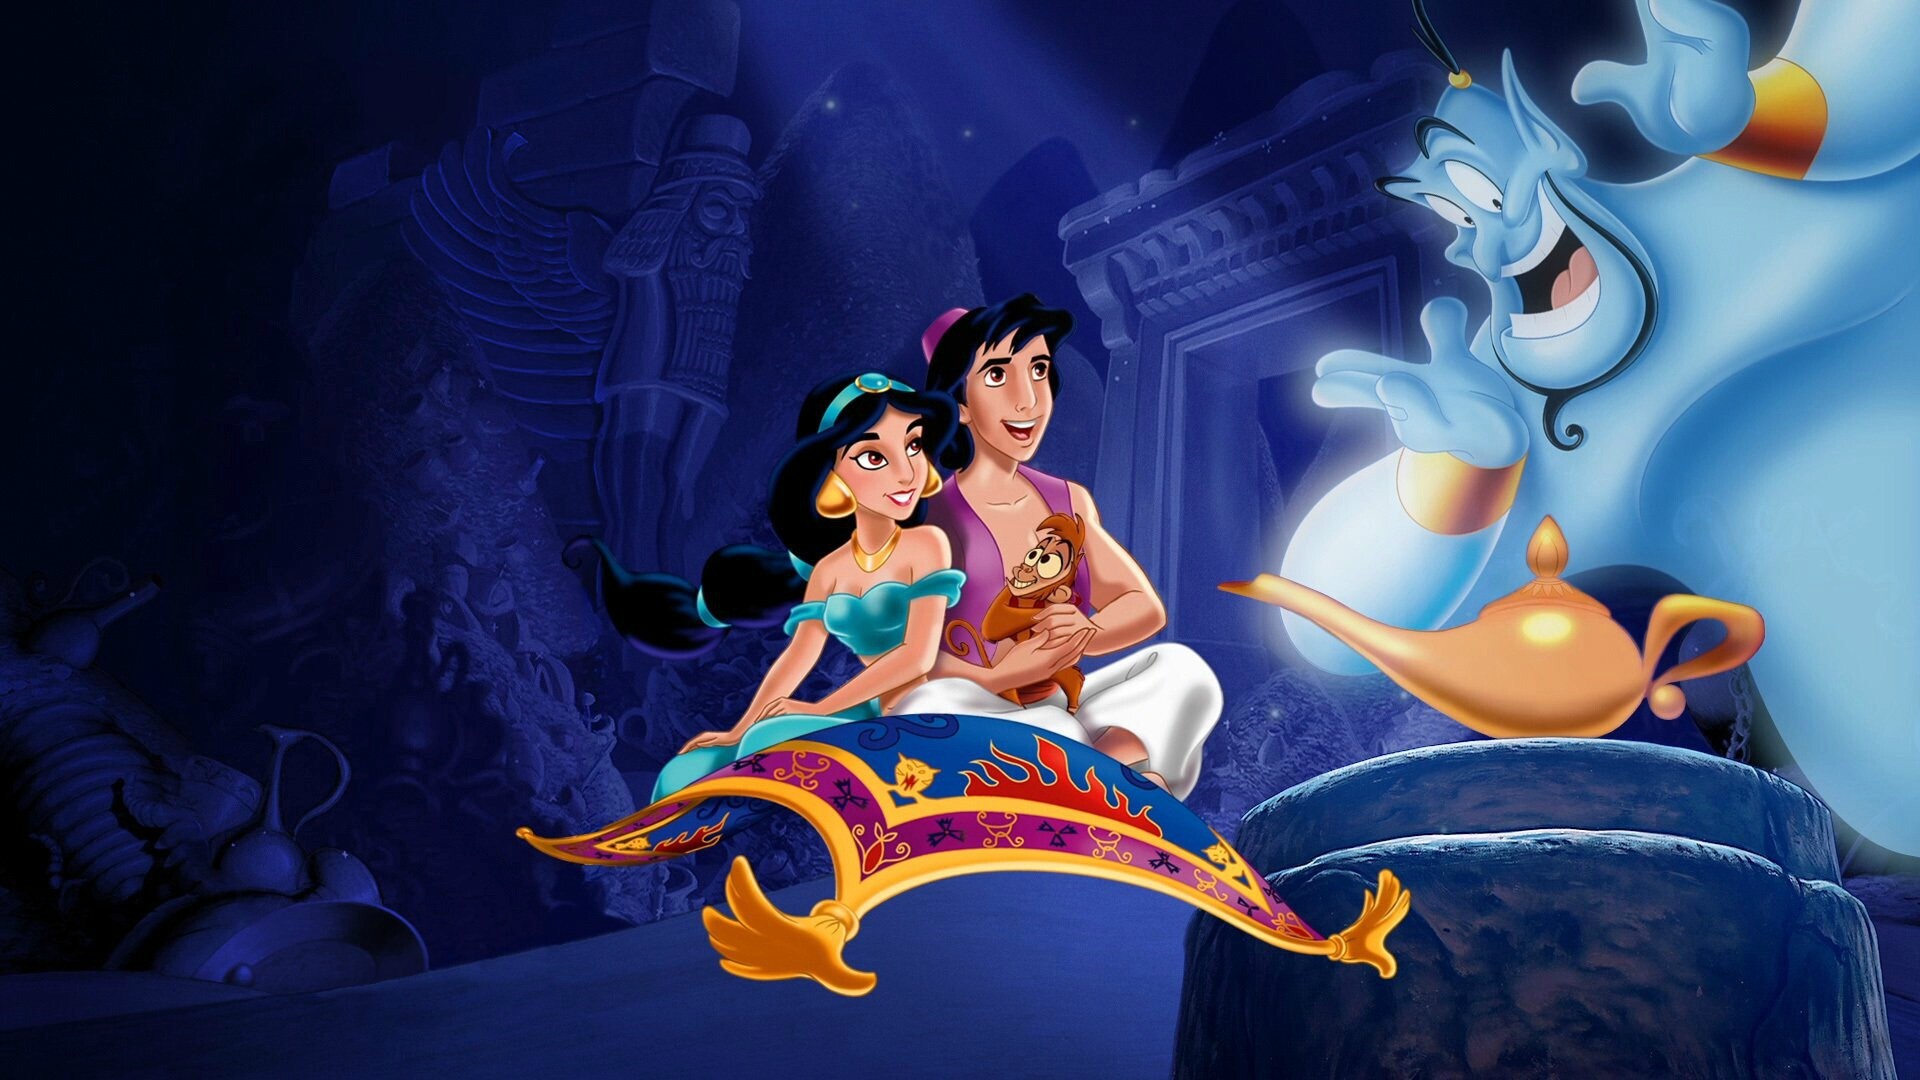 Aladdin (Cartoon): Monkey Abu, Jasmine, Flying carpet, Disney. 1920x1080 Full HD Wallpaper.